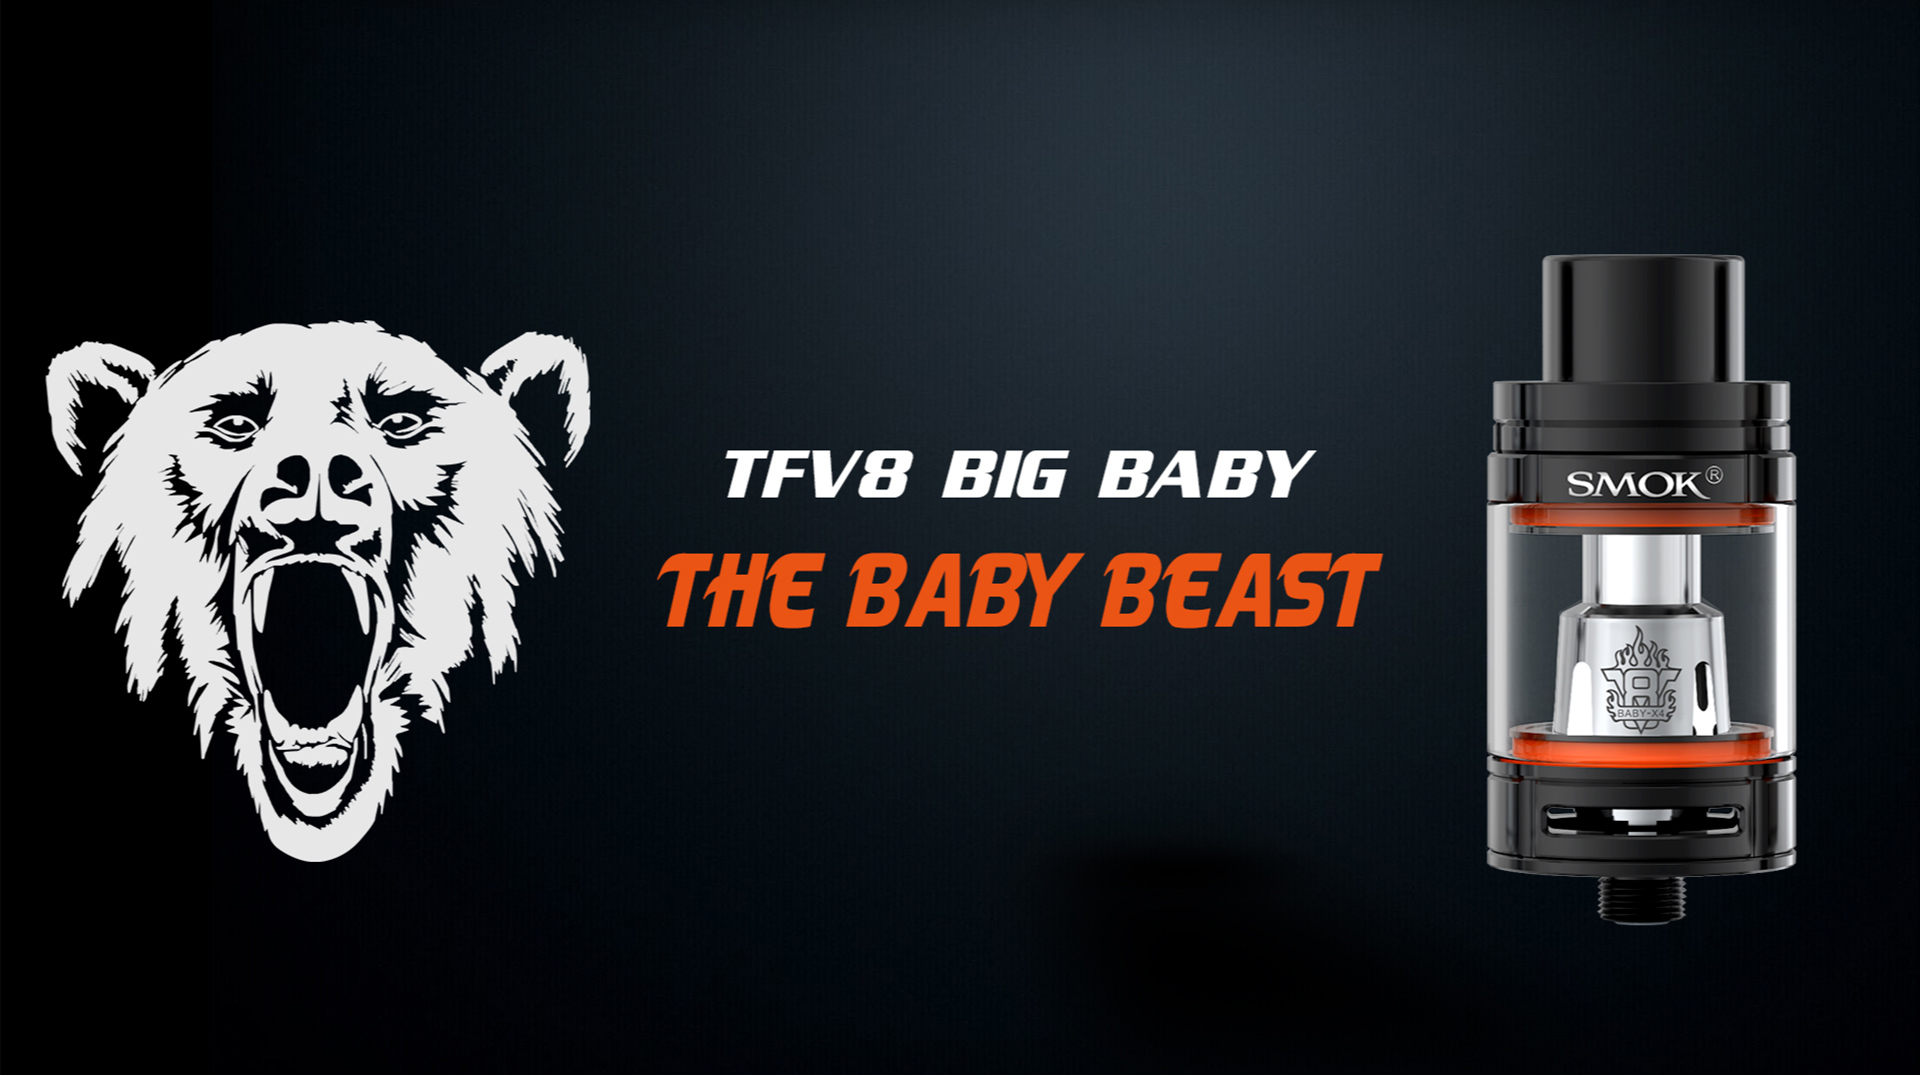 SMOK G320 Marshal Kit&TFV8 Big Baby-The Baby Beast